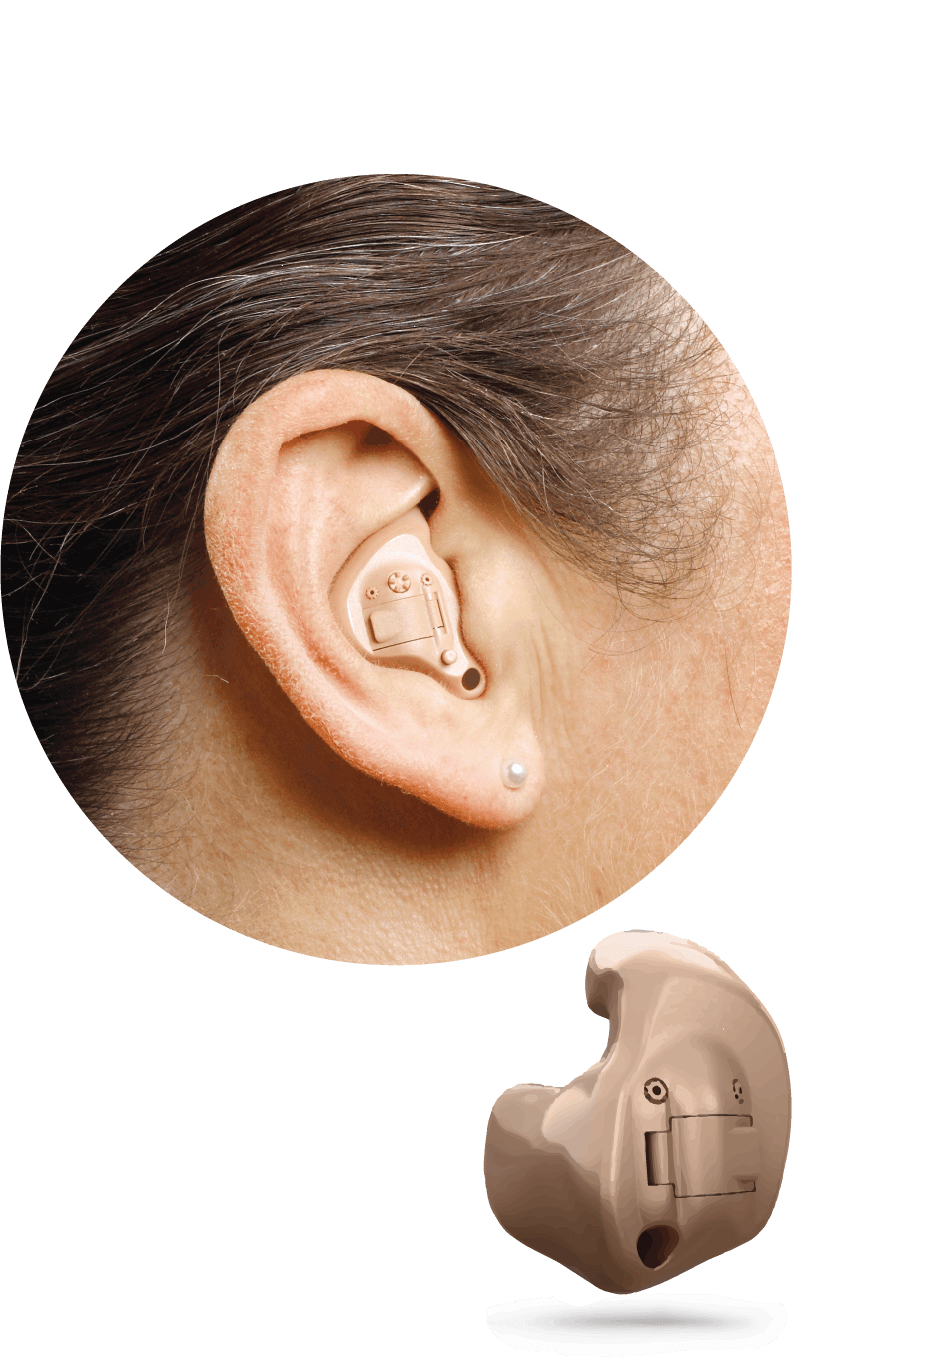 Конха слуховой аппарат. Внутриушной слуховой аппарат Phonak. Внутриушные слуховые аппараты (ite). Аппарат слуховой внутриушной конха. Качественные слуховые аппараты